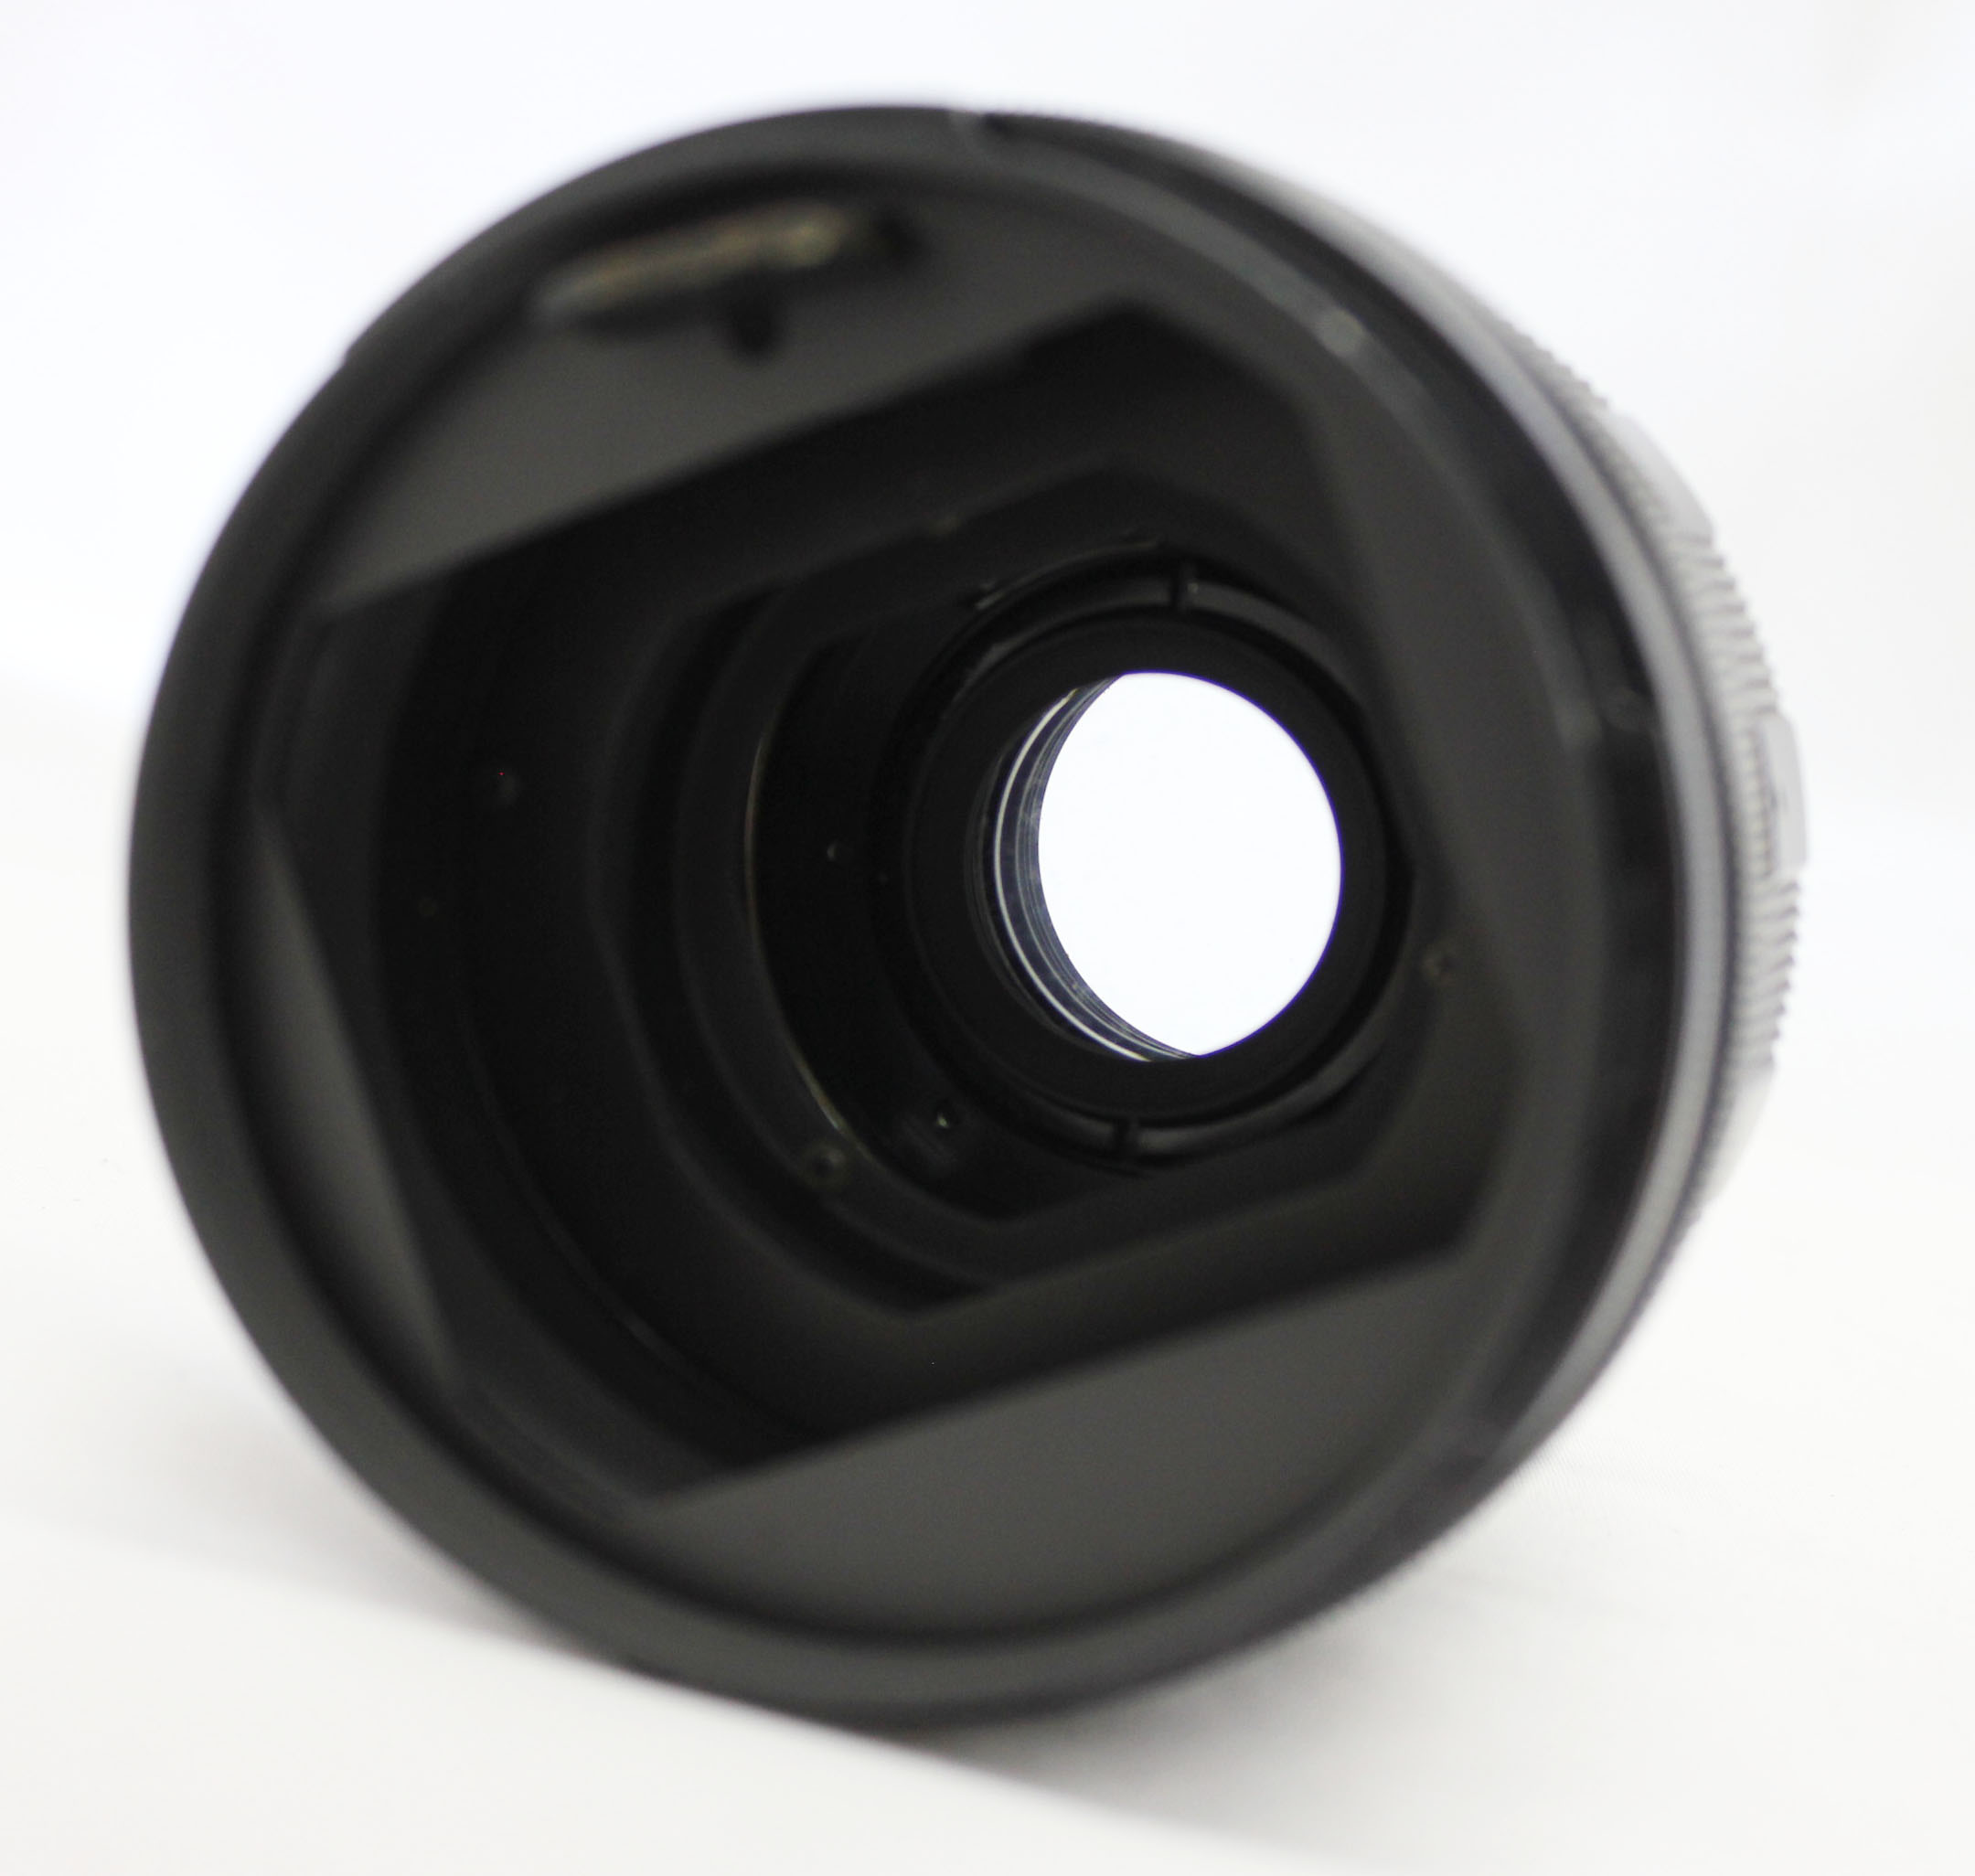  Mamiya-Sekor P 127mm F/4.7 Lens for Universal Press Super 23 from Japan Photo 2